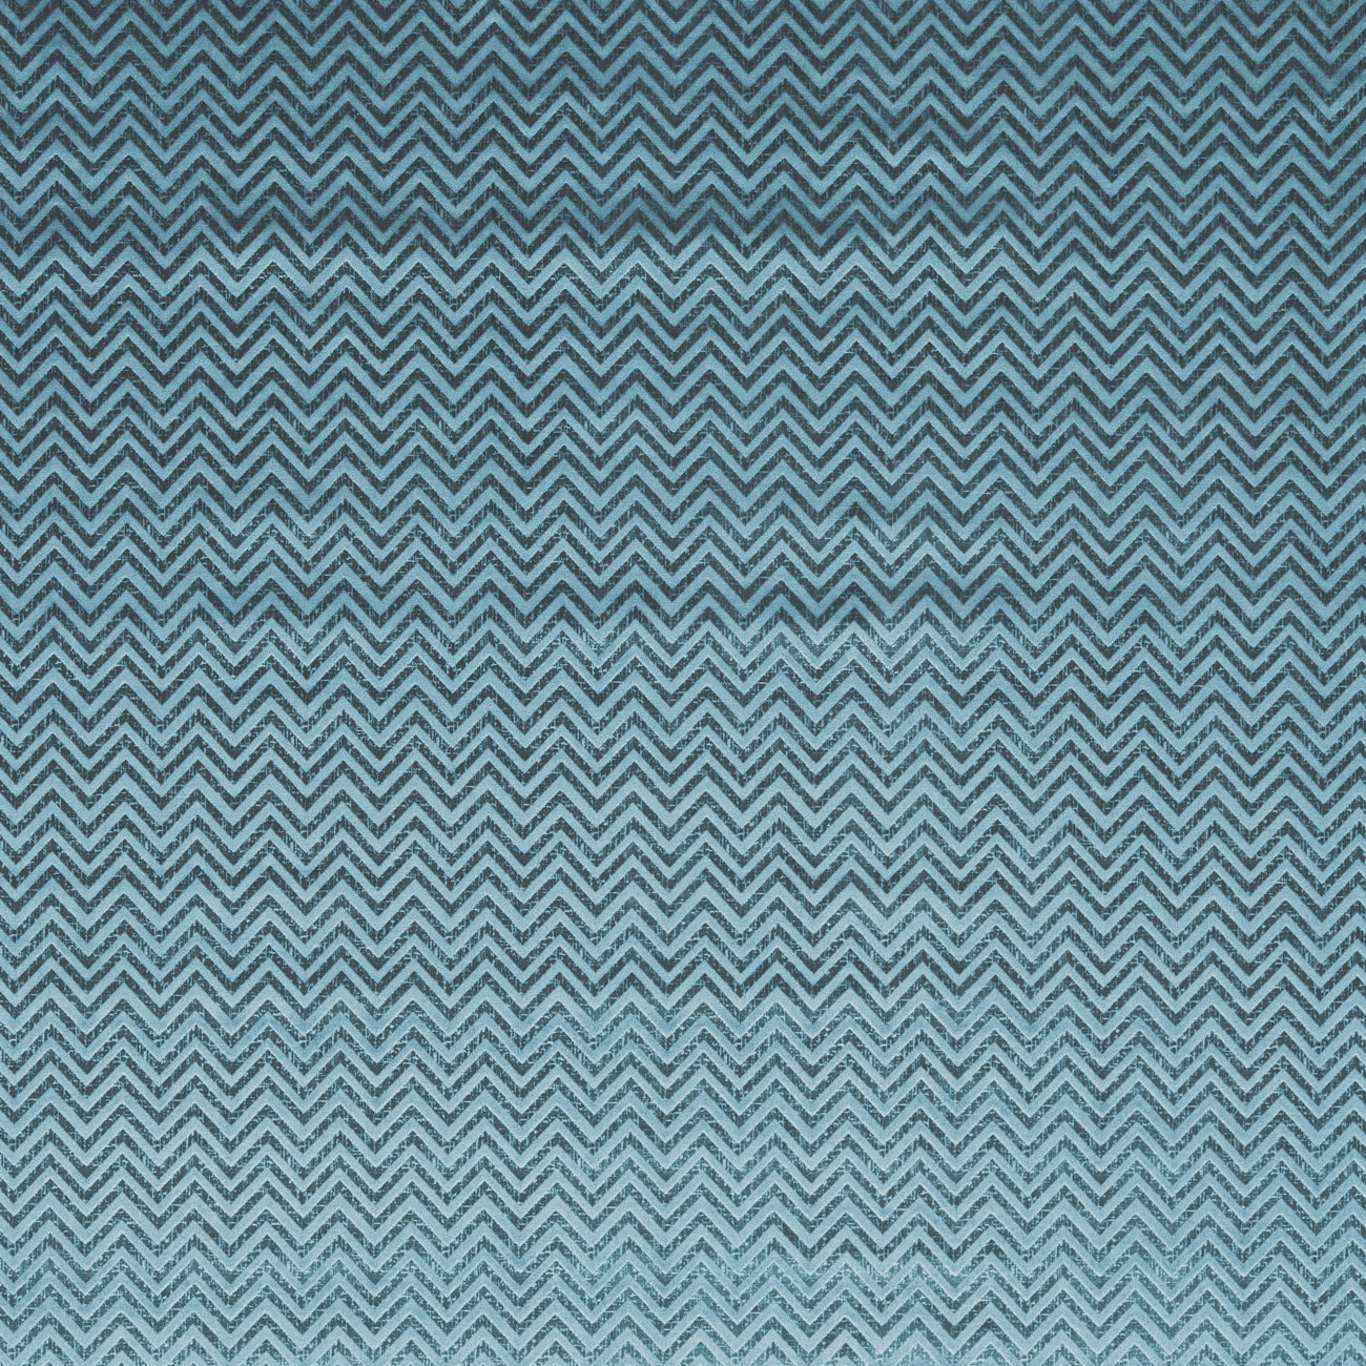 Nexus Teal Fabric by CNC